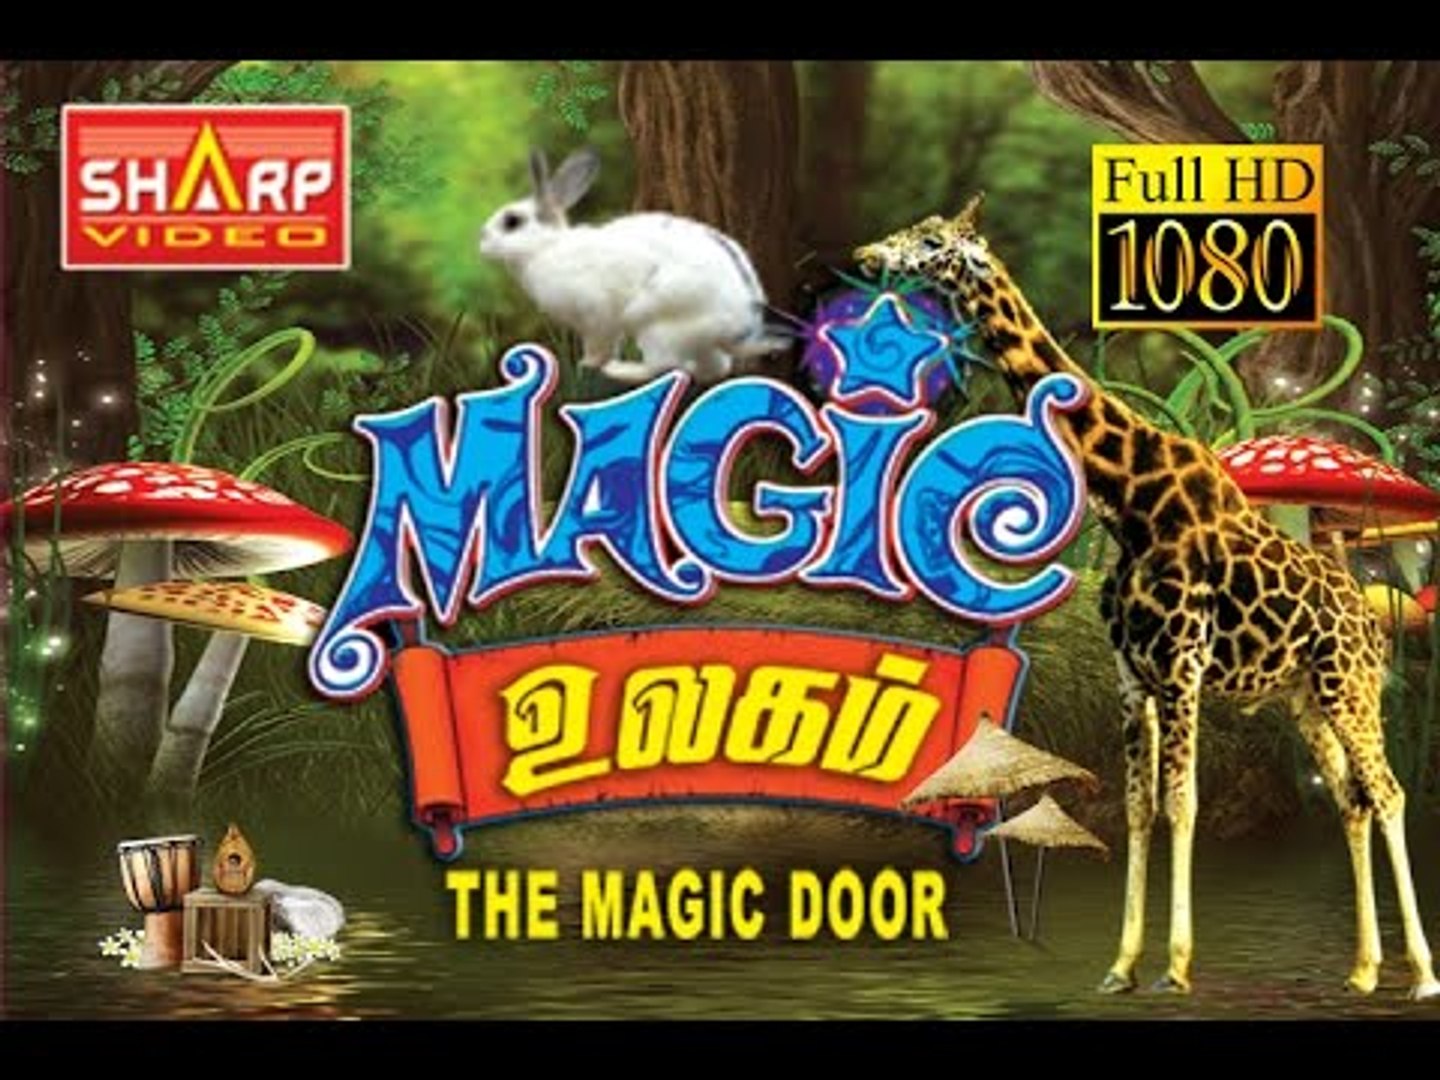 The Magic Door Hd Fullmovie Tamil Magic Ulagam Video Dailymotion